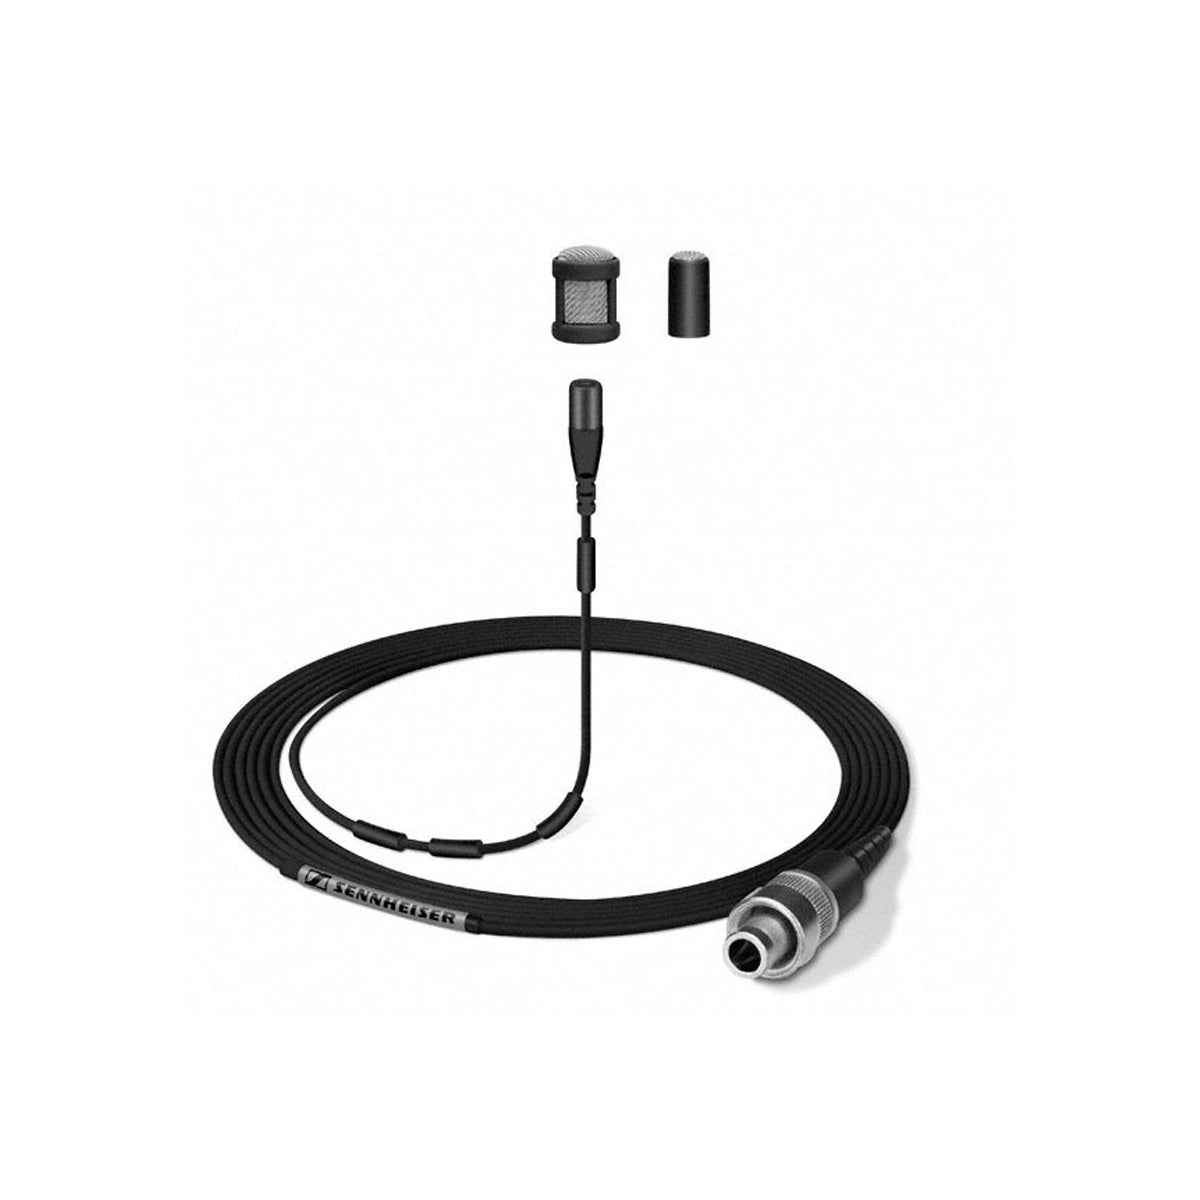 Sennheiser MKE 1-5 Omni-directional Lapel Microphone, Black, 3m Cable